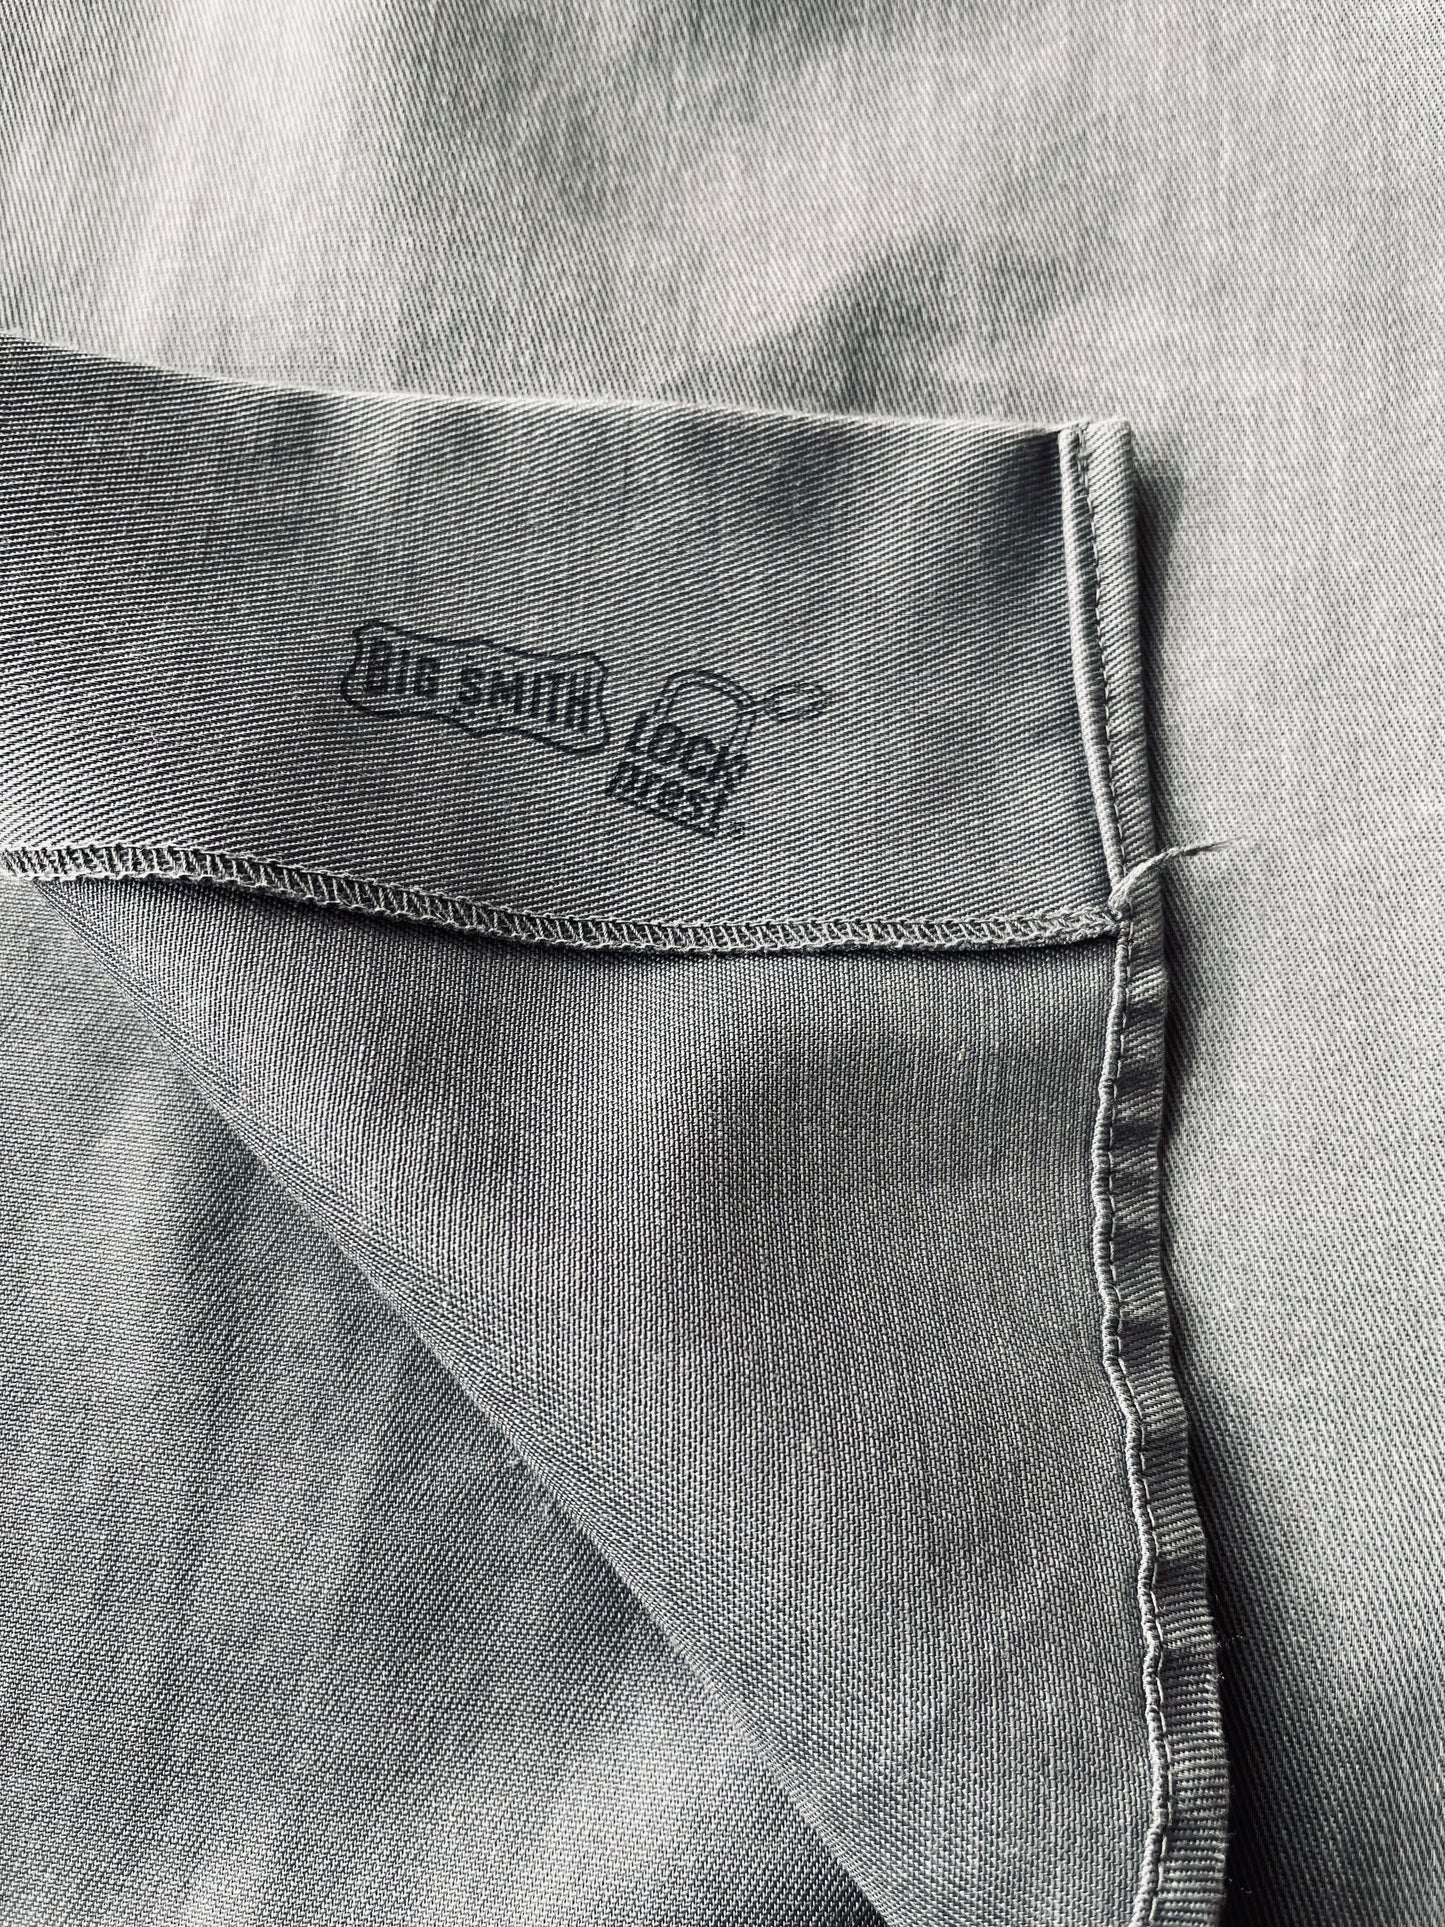 1960’s Big Smith Sanforized Work Shirt | Medium